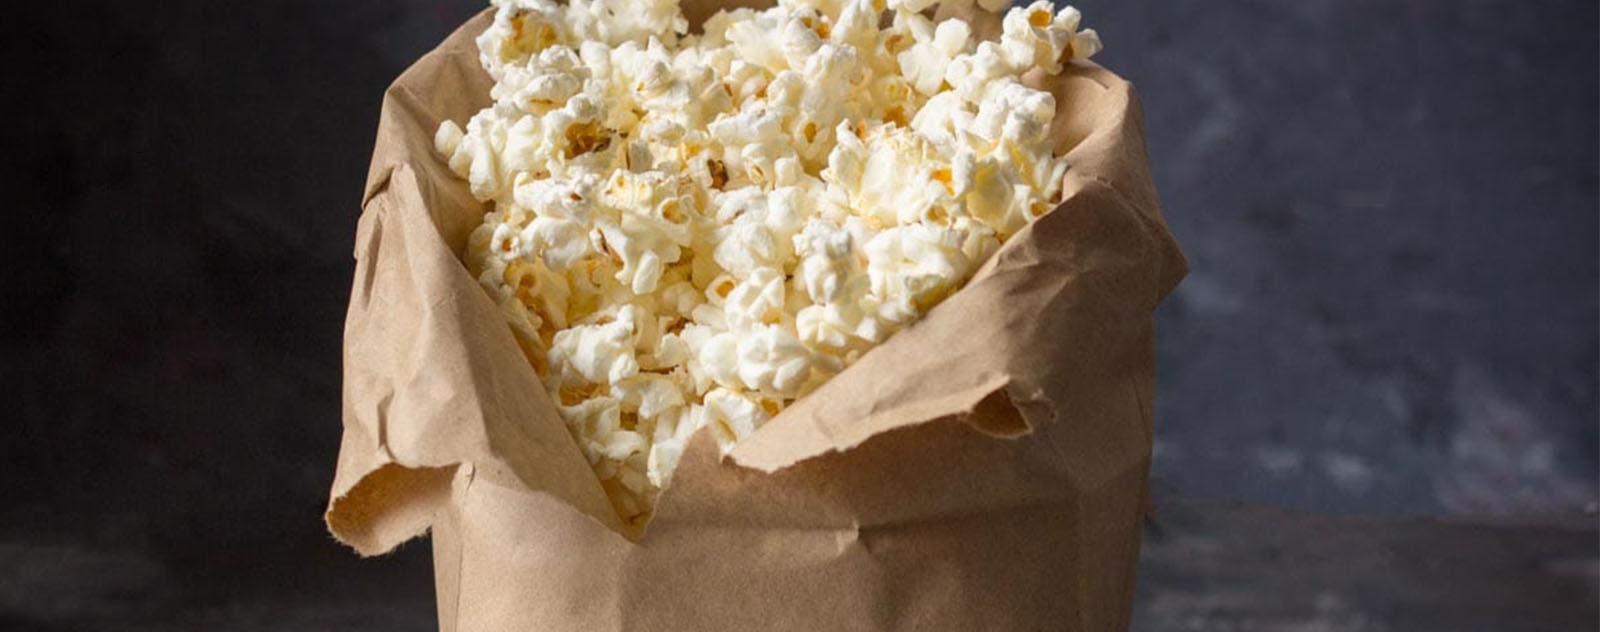 popcorn dans un sac brun